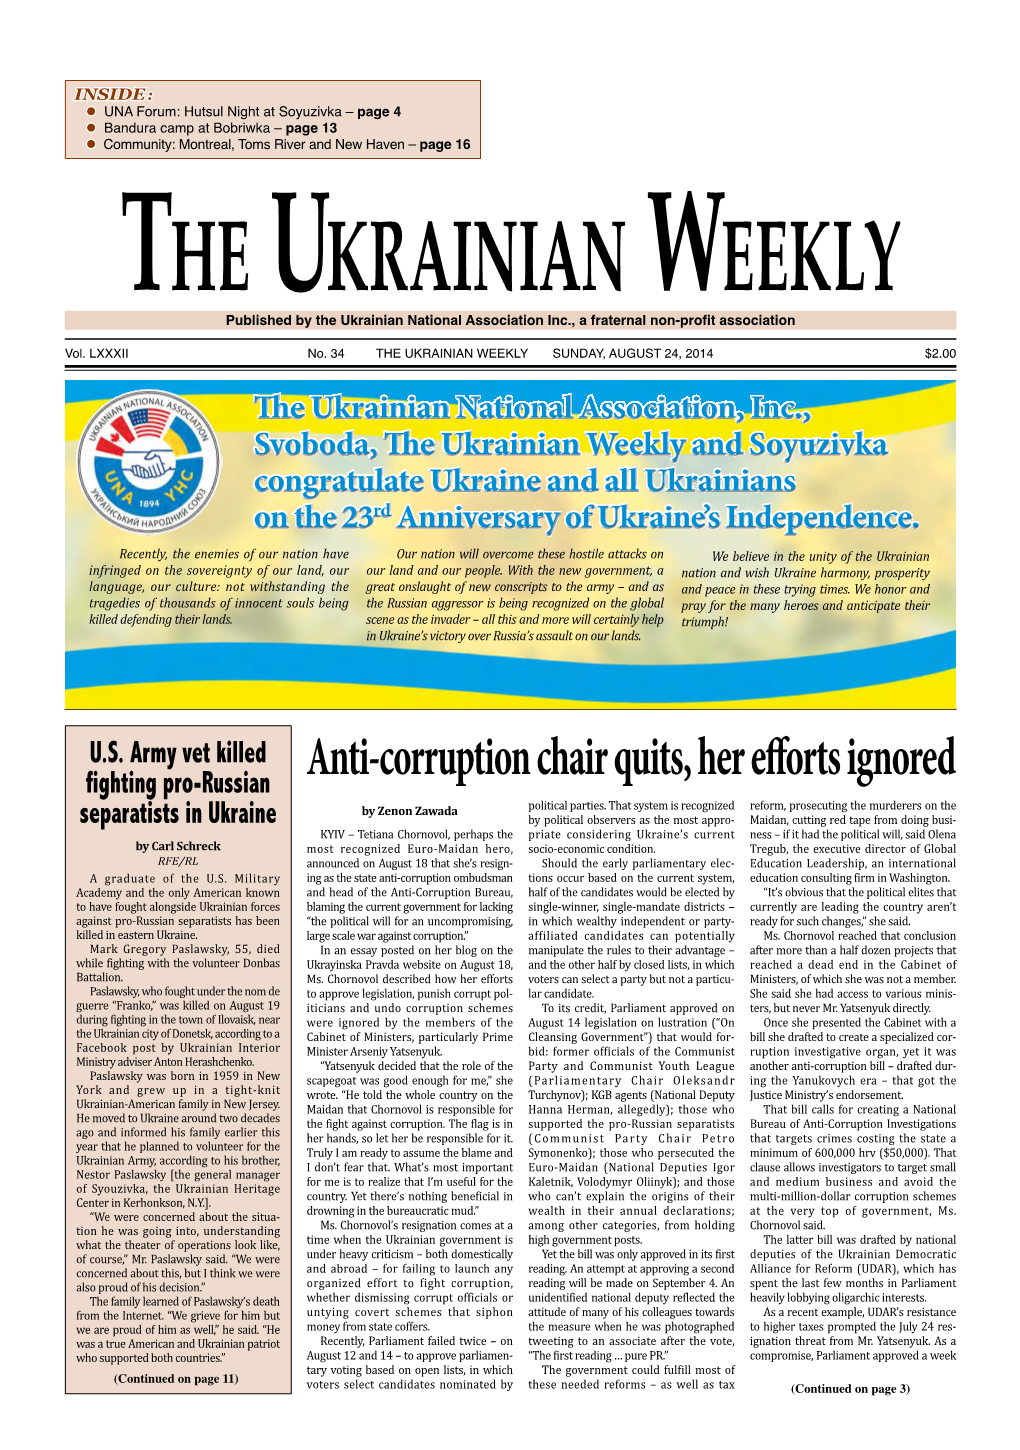 The Ukrainian Weekly 2014, No.34